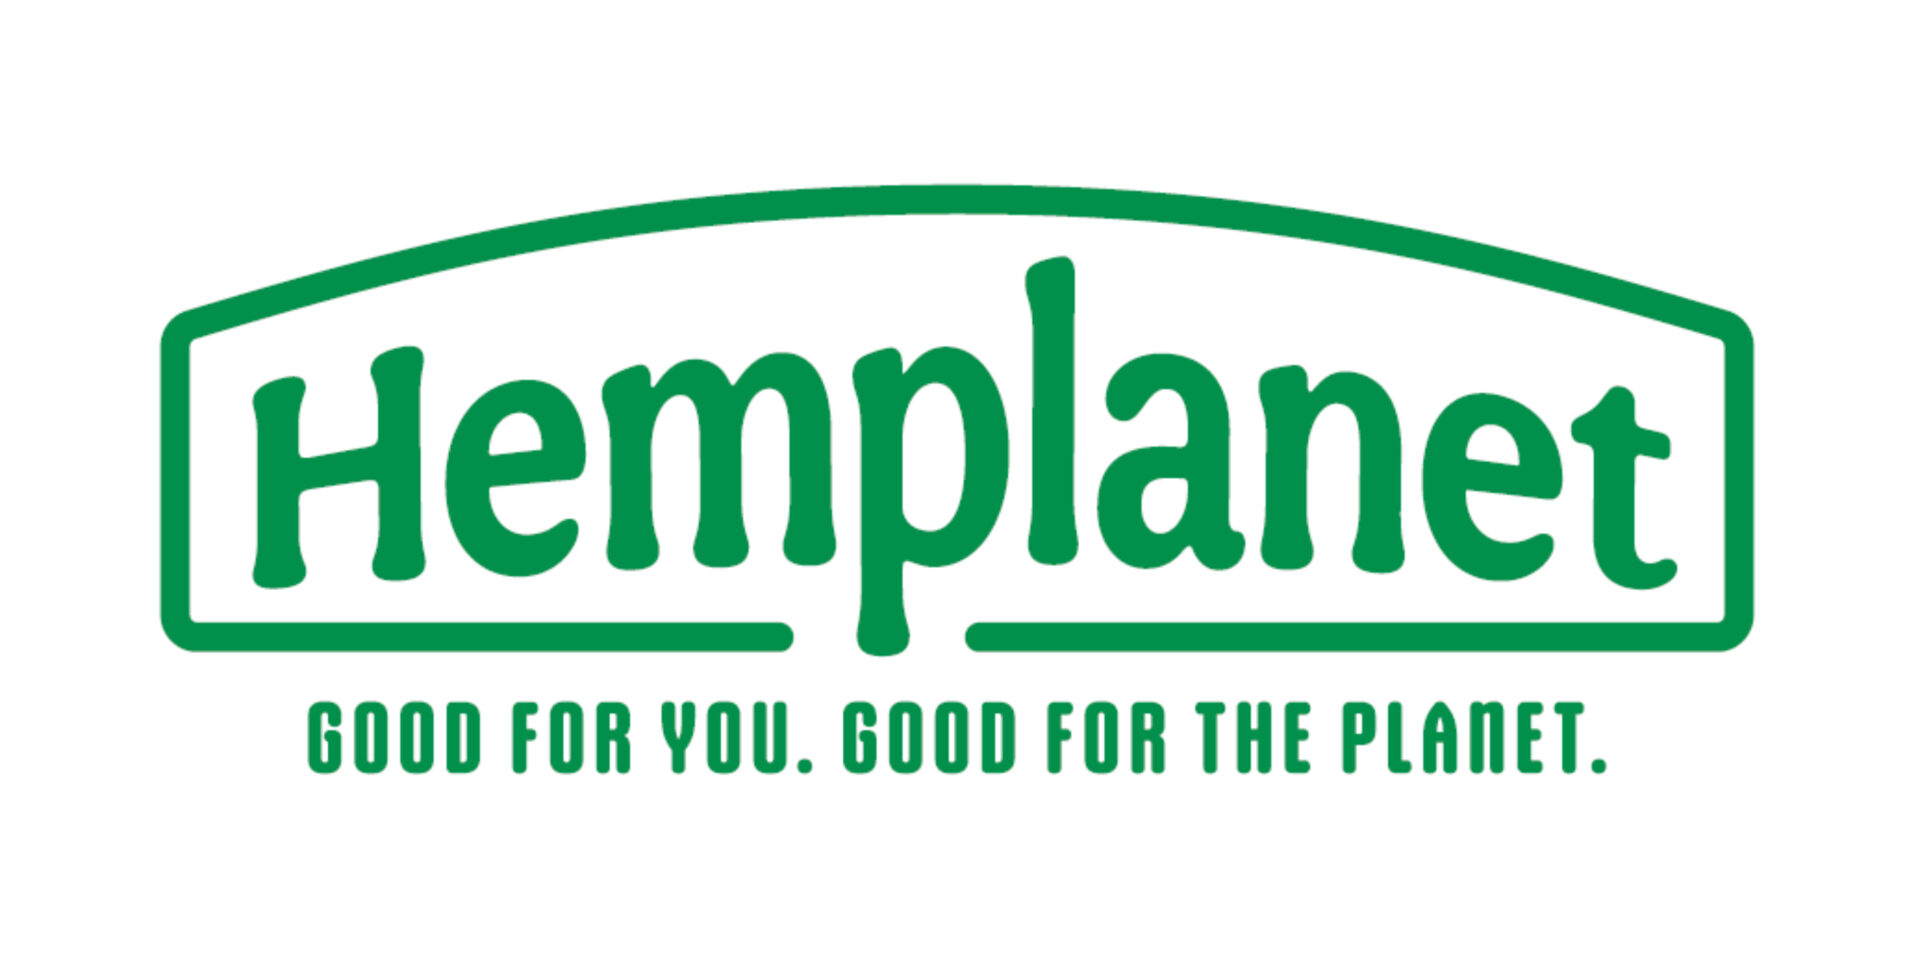 Hemplanet